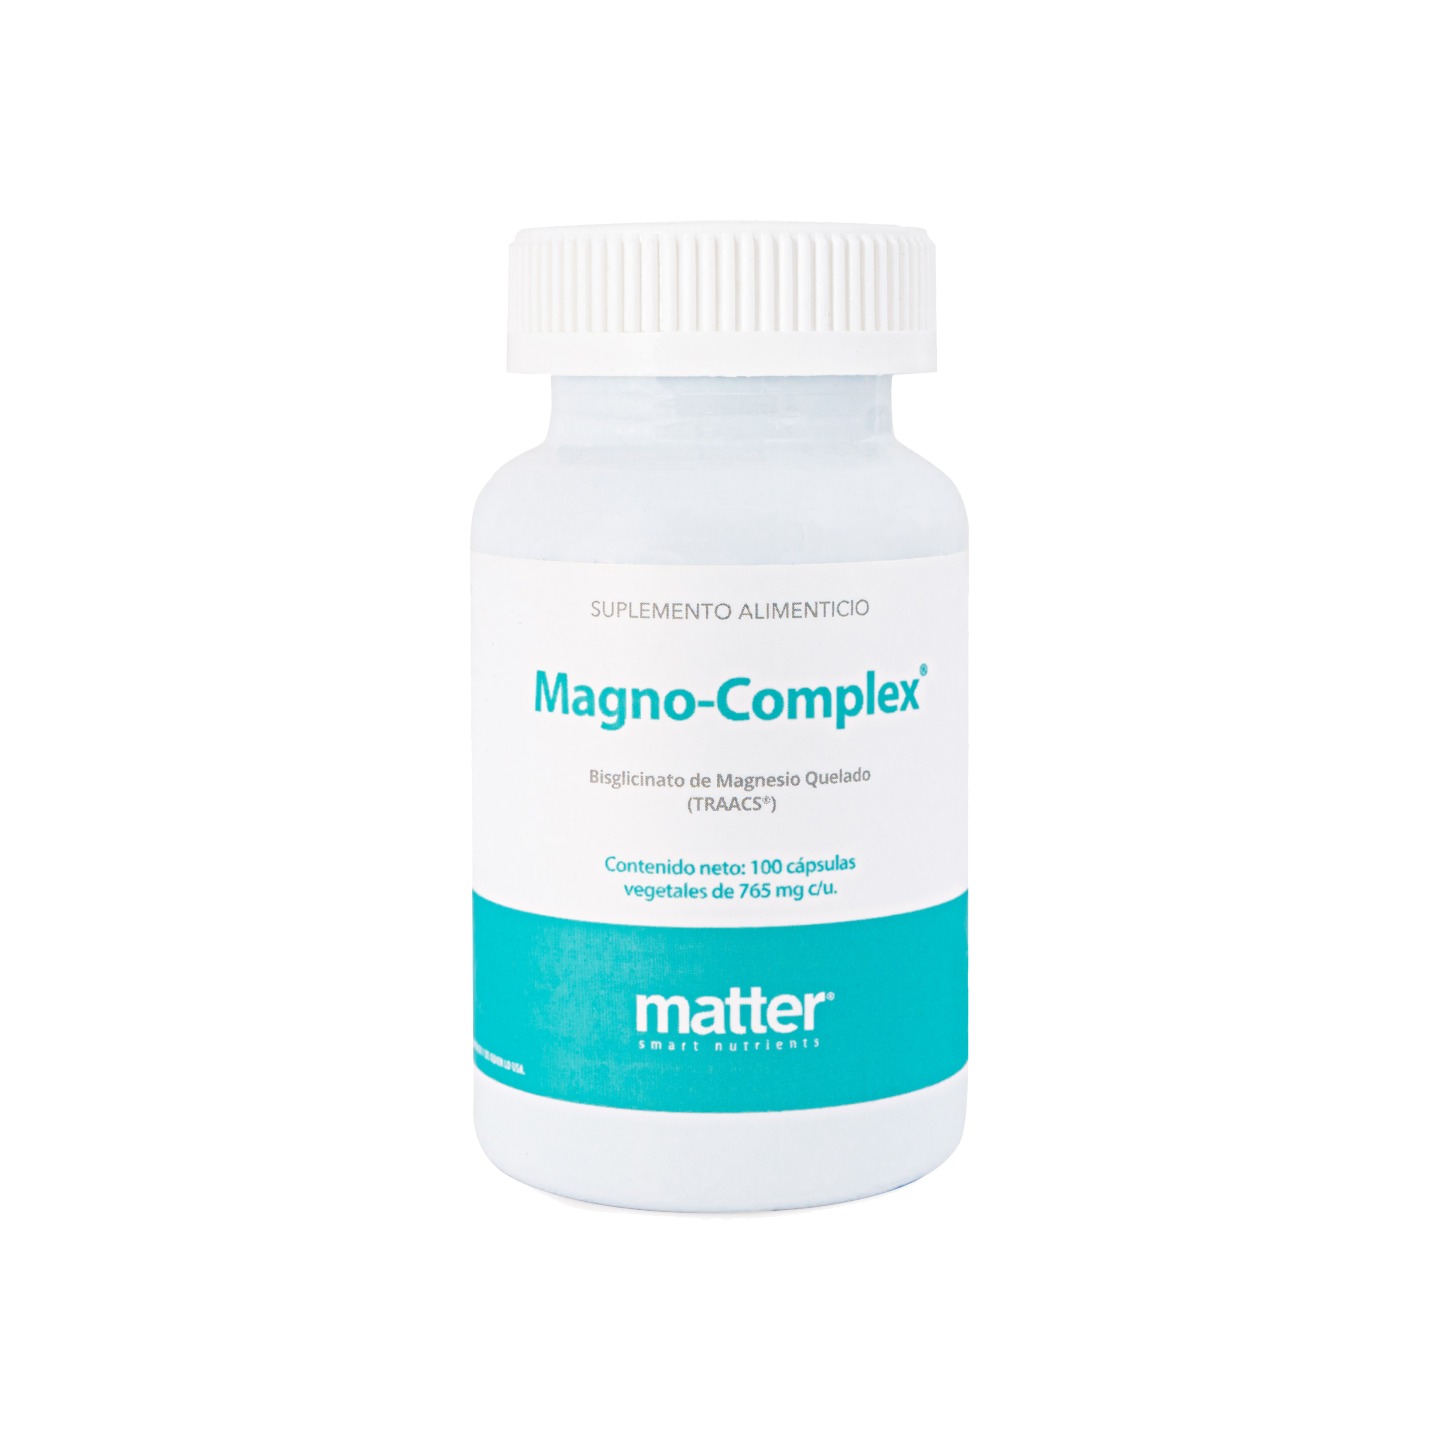 Magno-Complex - Bisglicinato de Magnesio Quelado -LIFE-